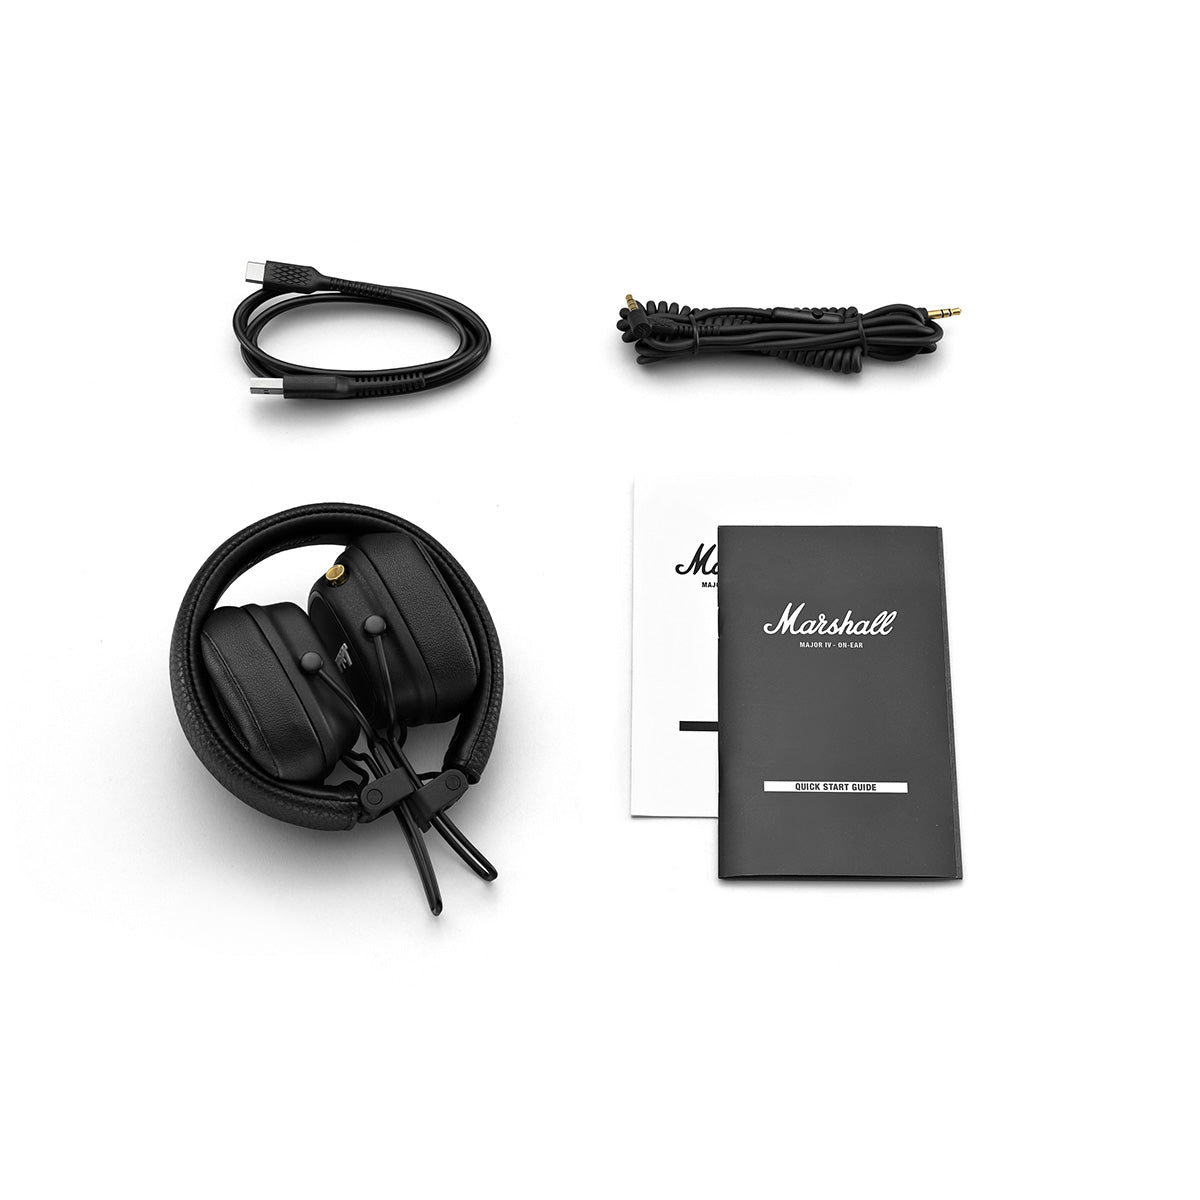 Marshall Major lV Wireless Headphone